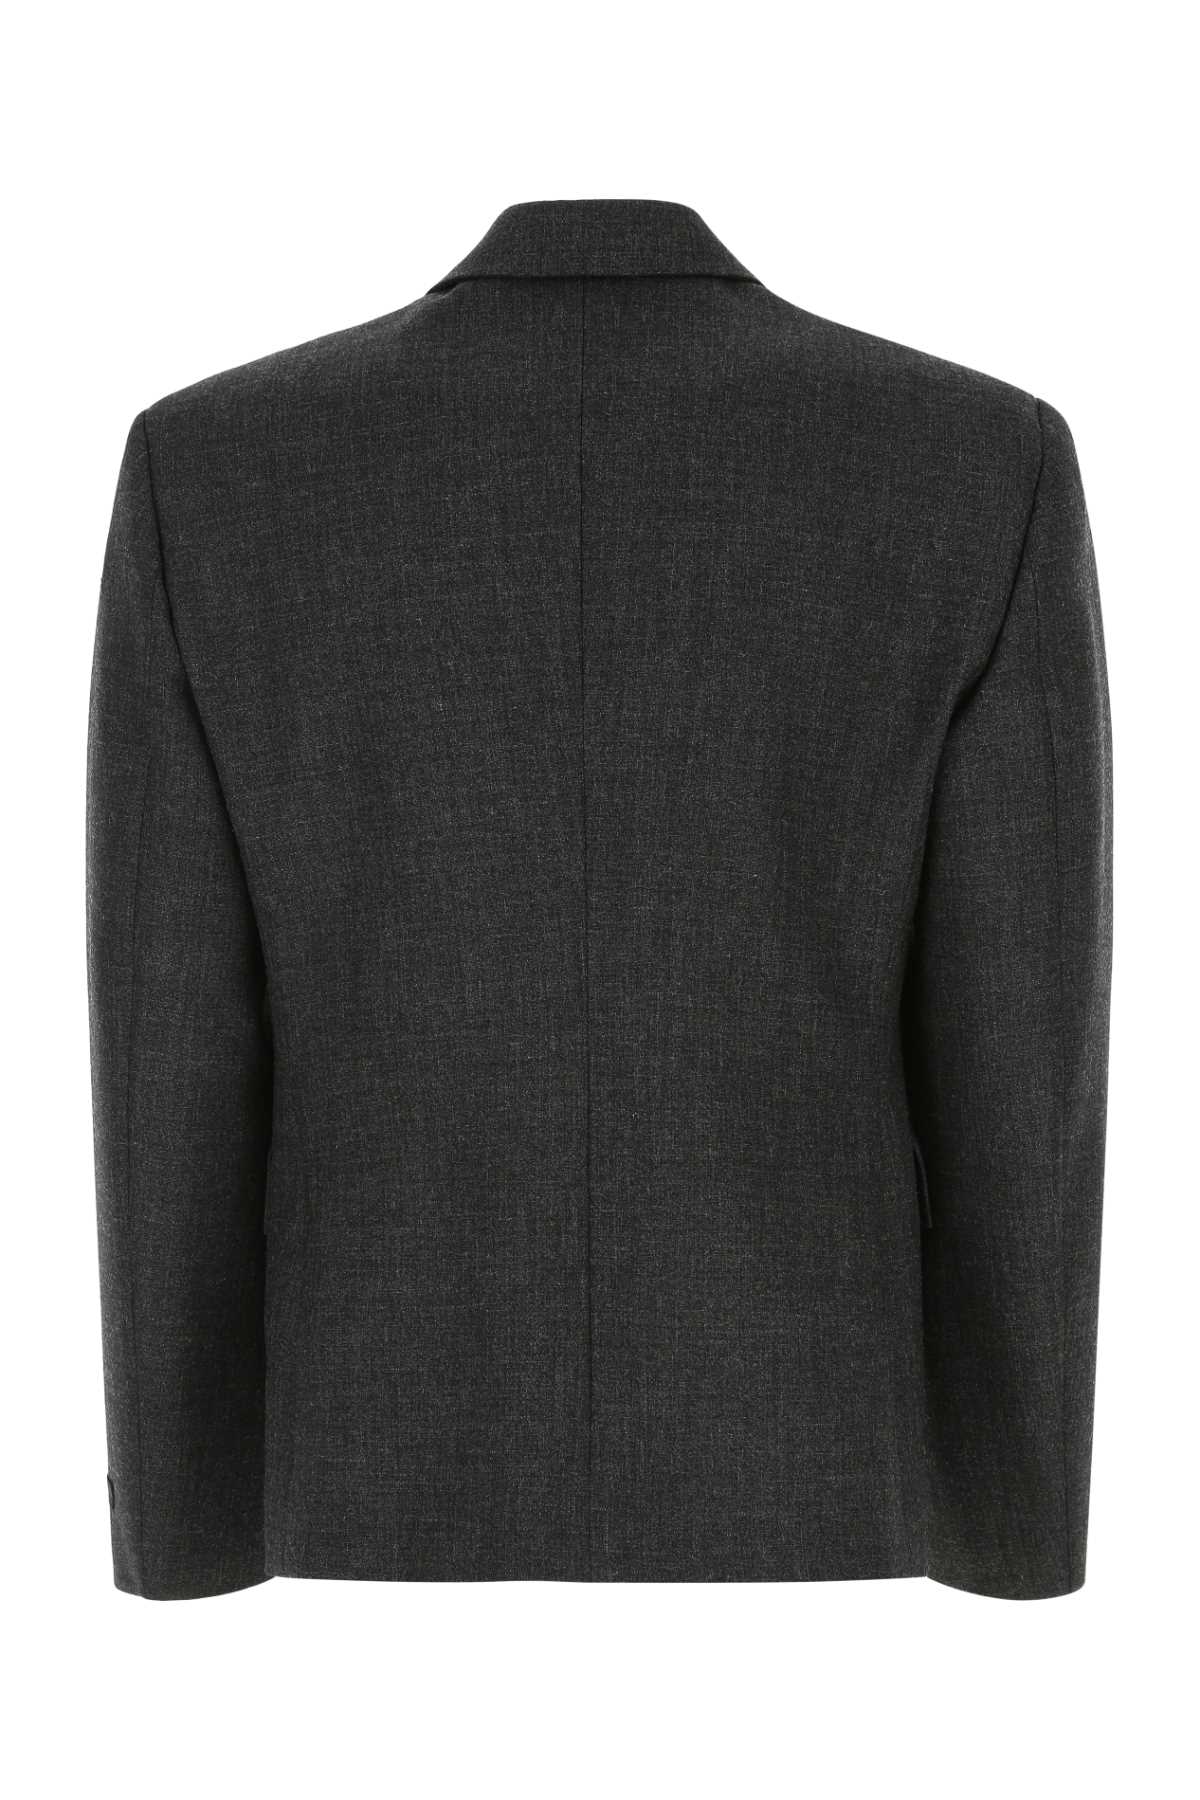 Prada Melange Dark Grey Wool Blazer In F0308